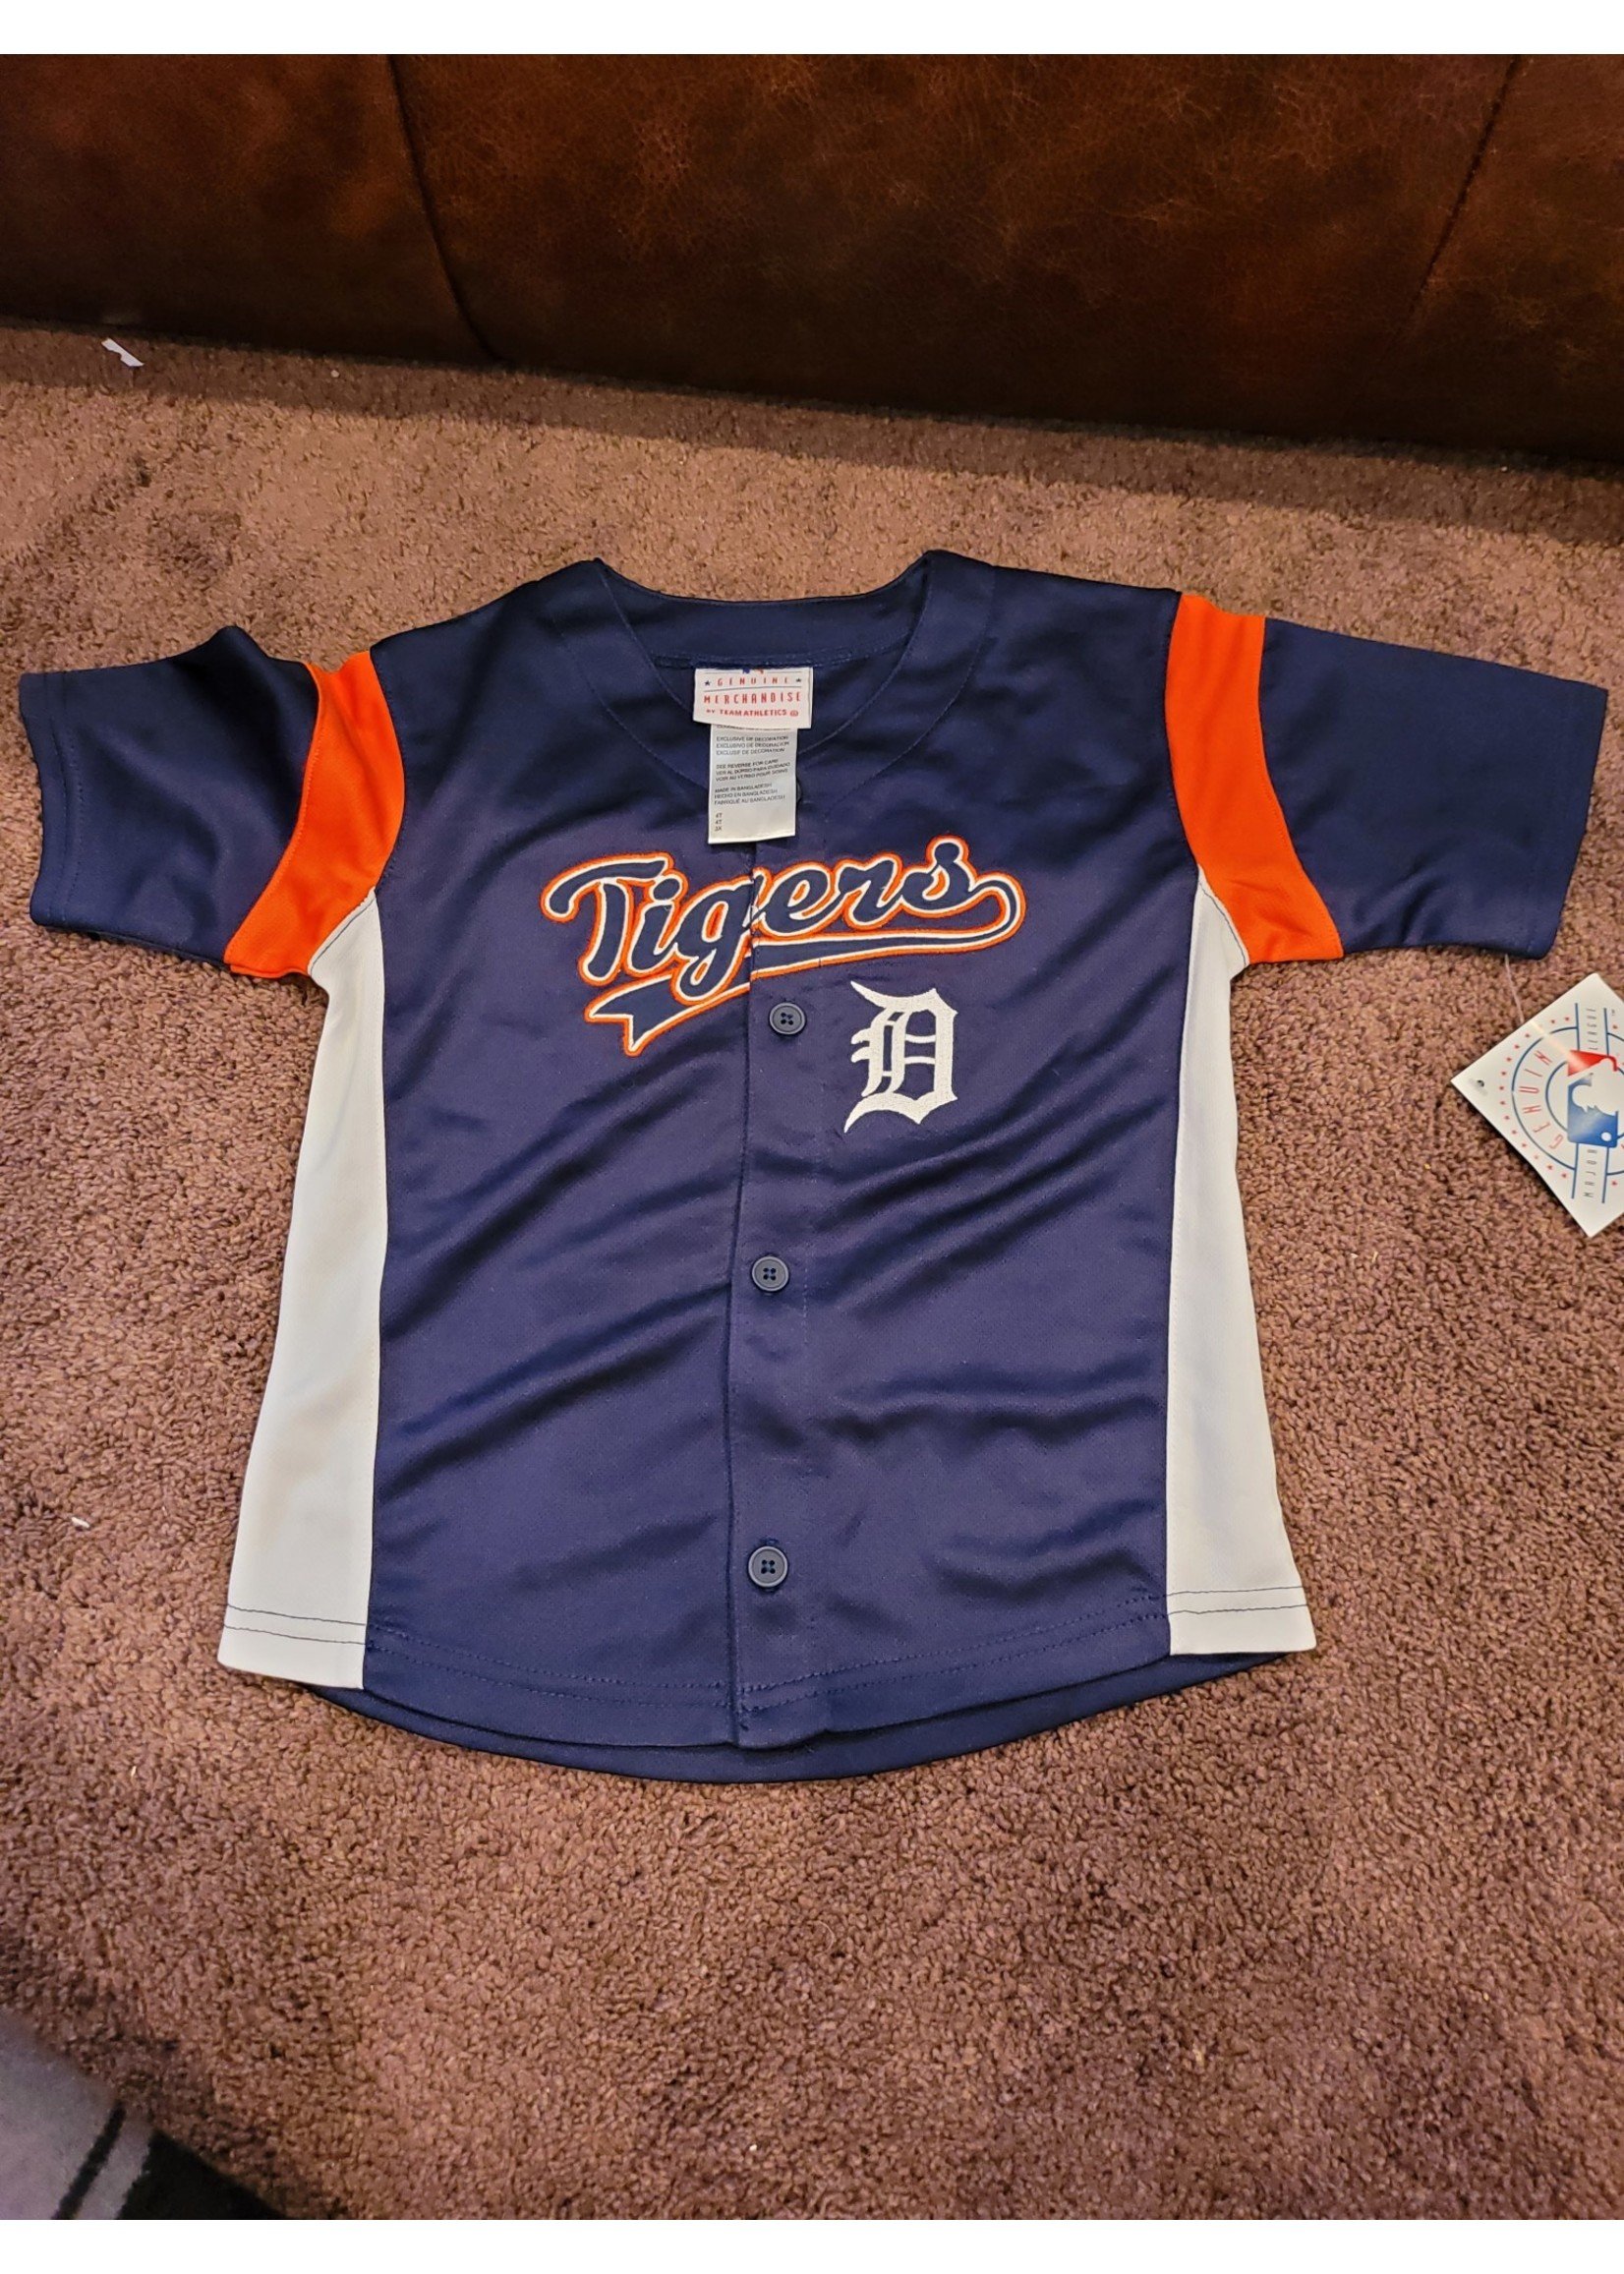 MLB Size 4T Detroit Tigers Alternate 1 Toddler Replica Baseball Jersey in Navy